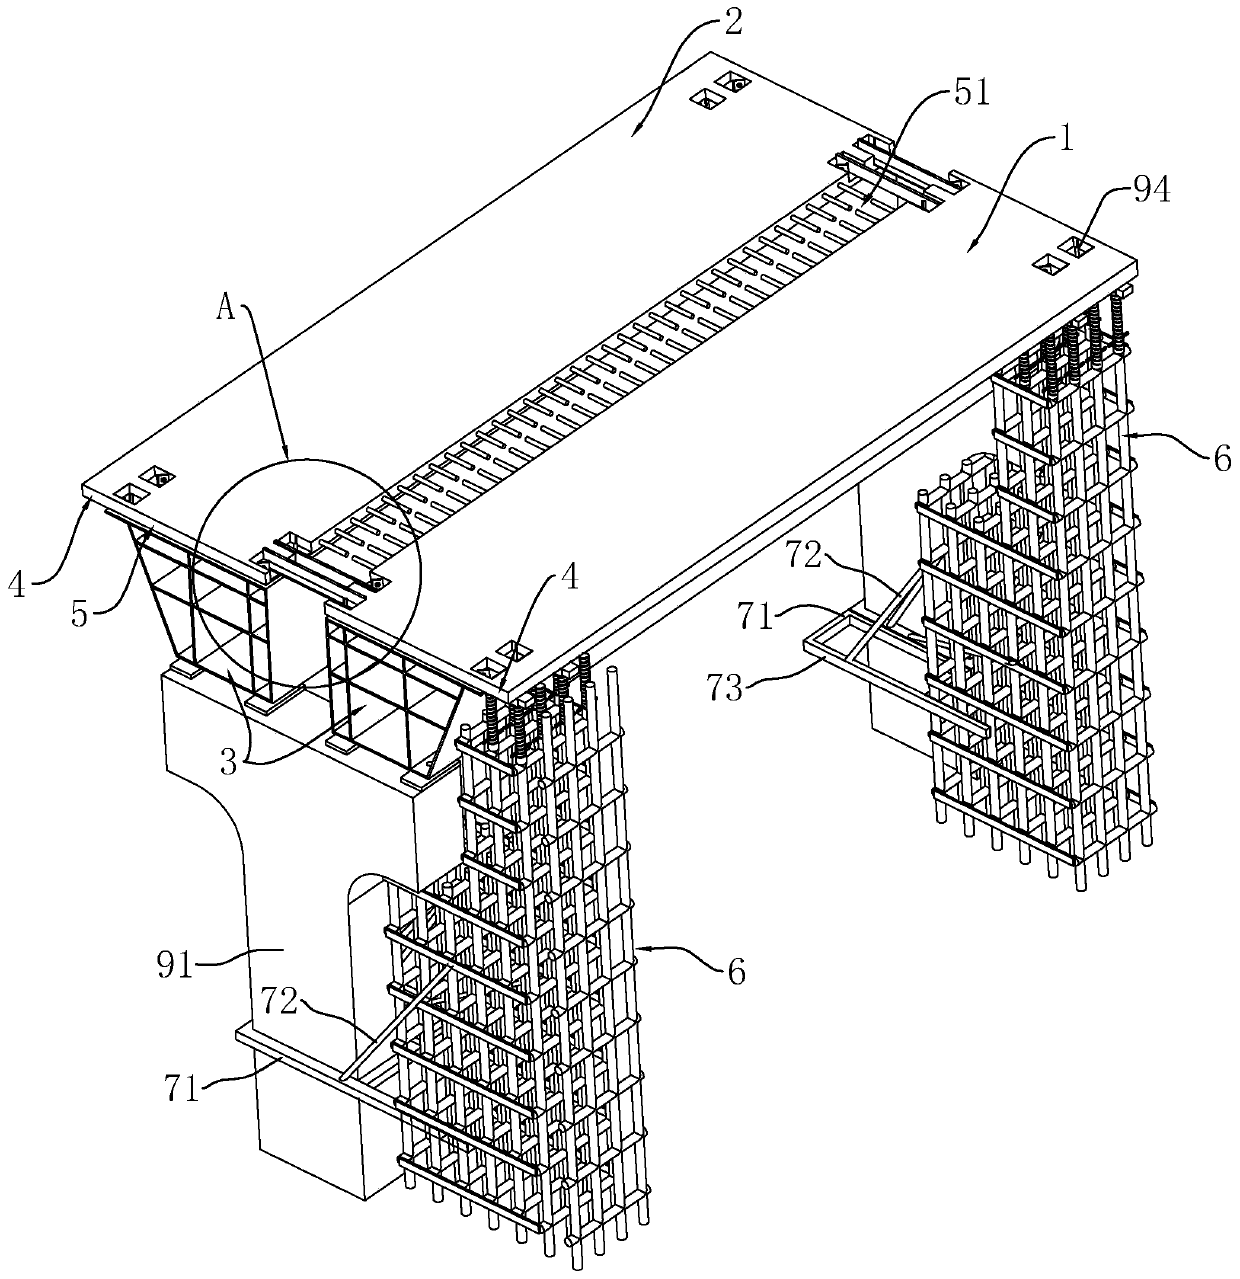 Construction method of reinforced concrete box girder